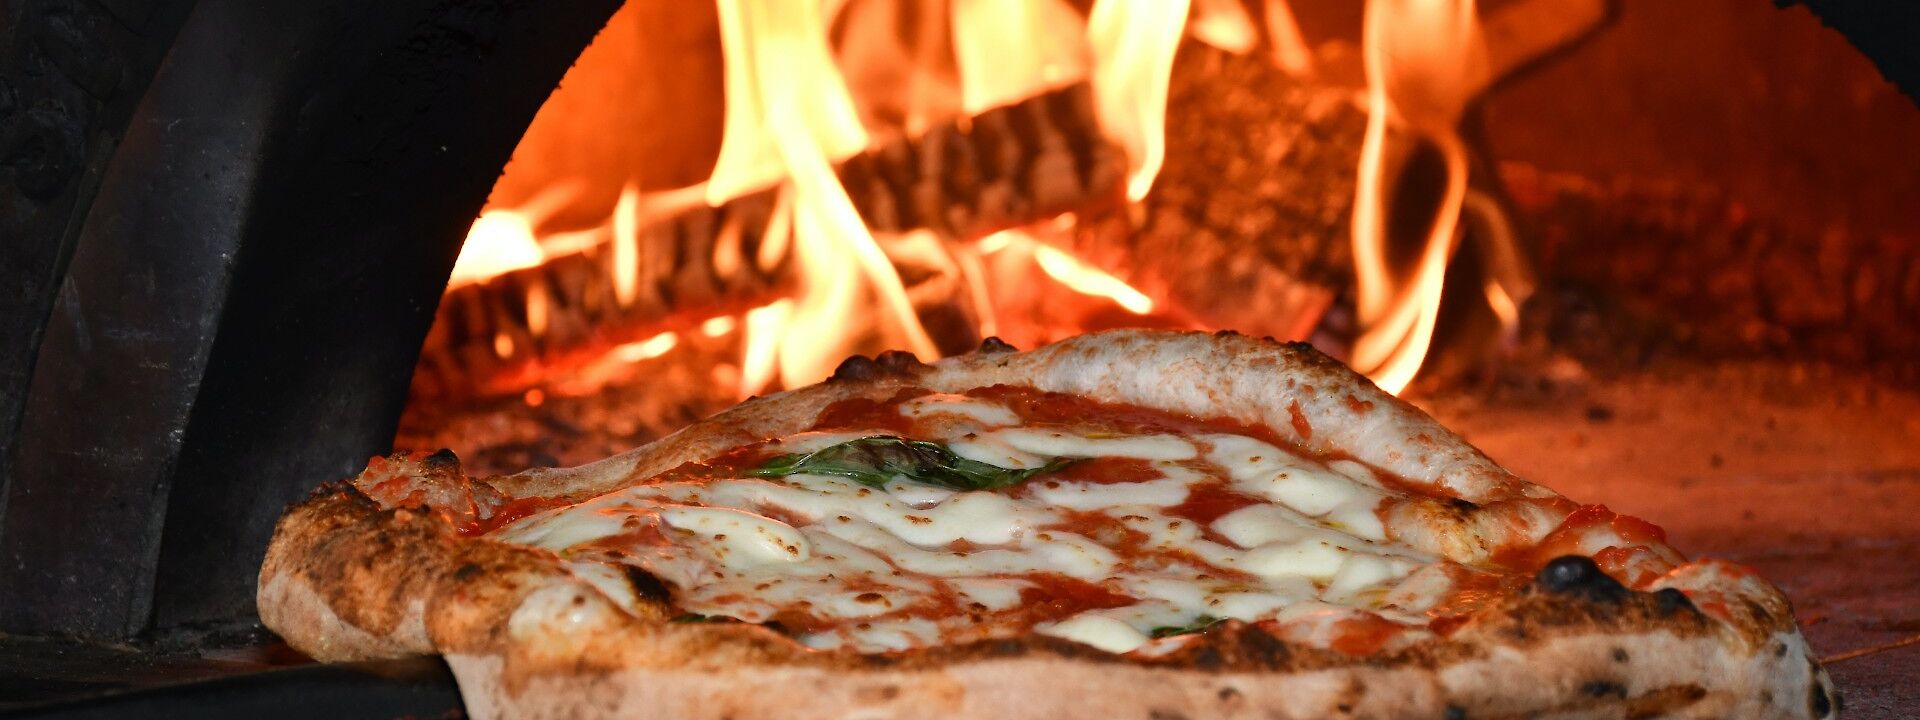 Pizza from the oven, Rome, Italy. Fabrizio Pullara@Unsplash